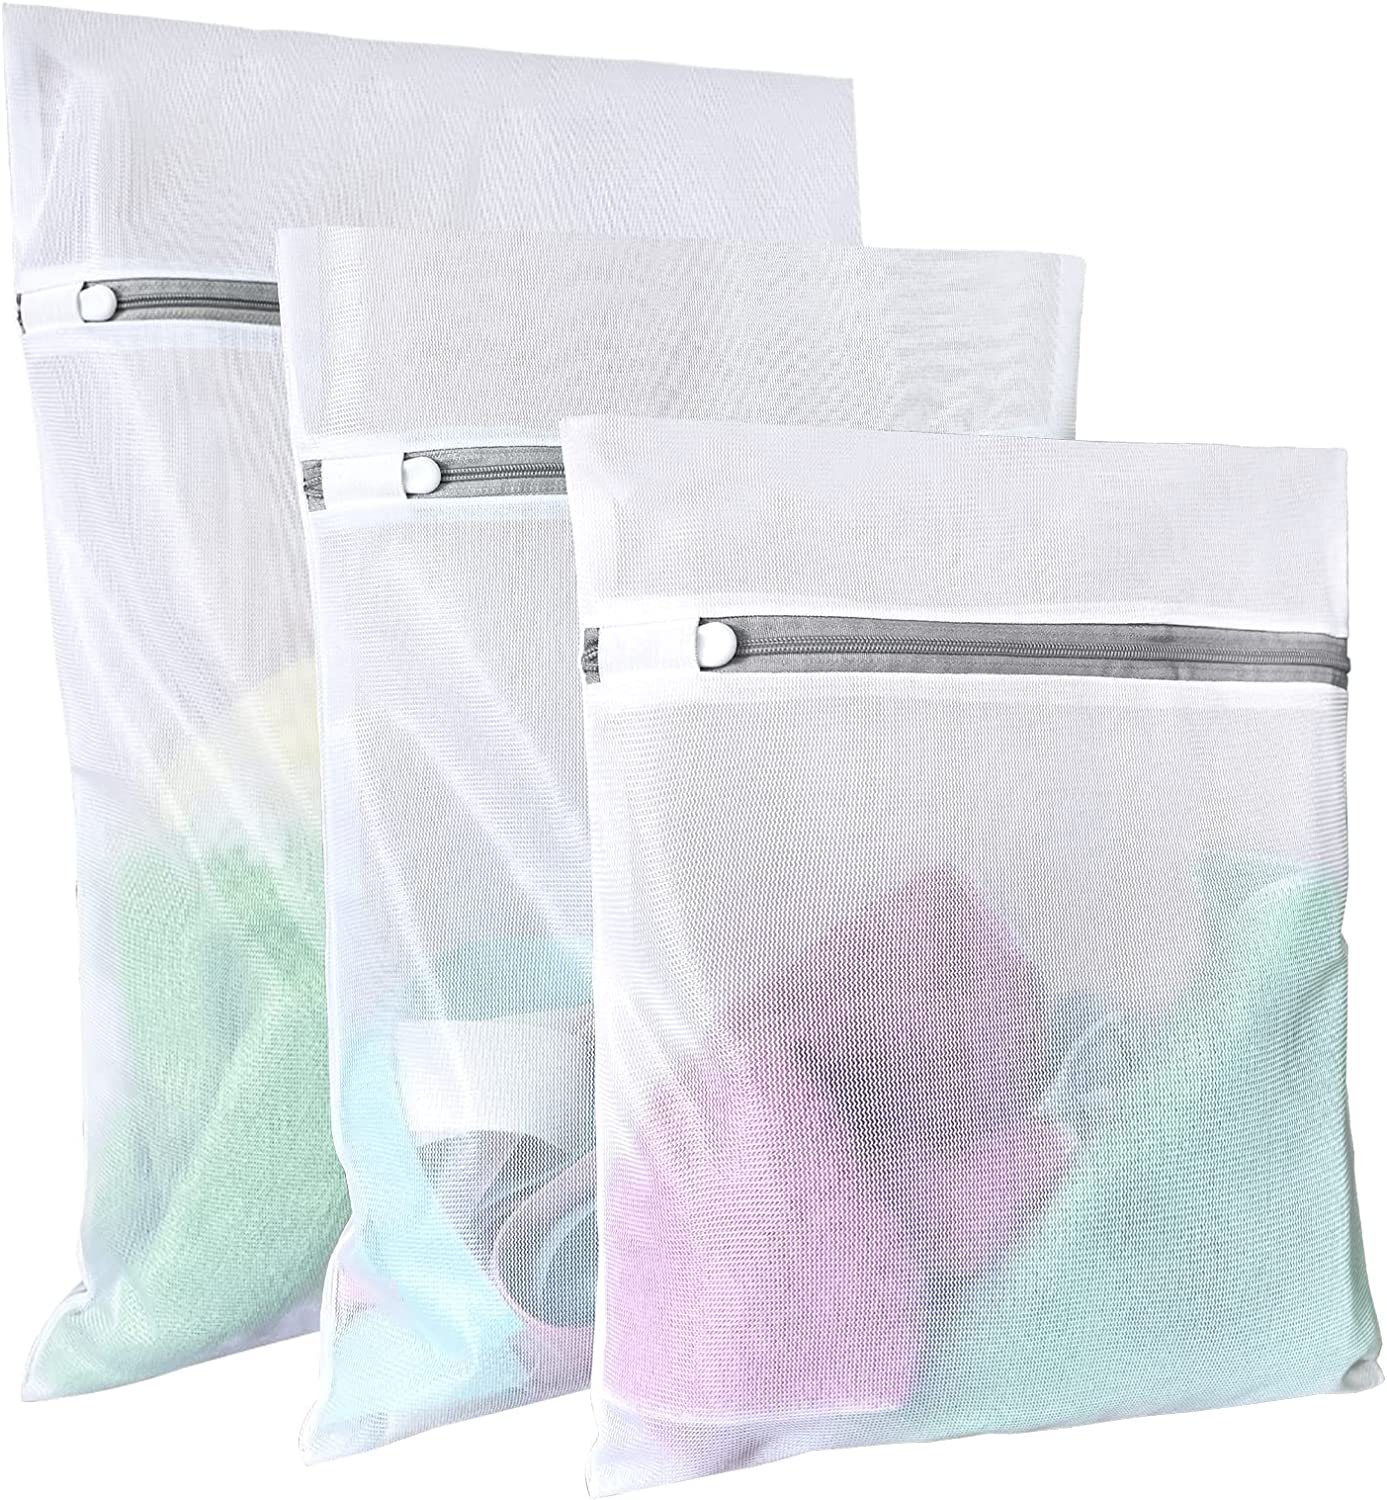 GOGOODA Laundry Mesh Bag Bra Wash Bag for Lingerie, Underwear, Delicates (3  Set)